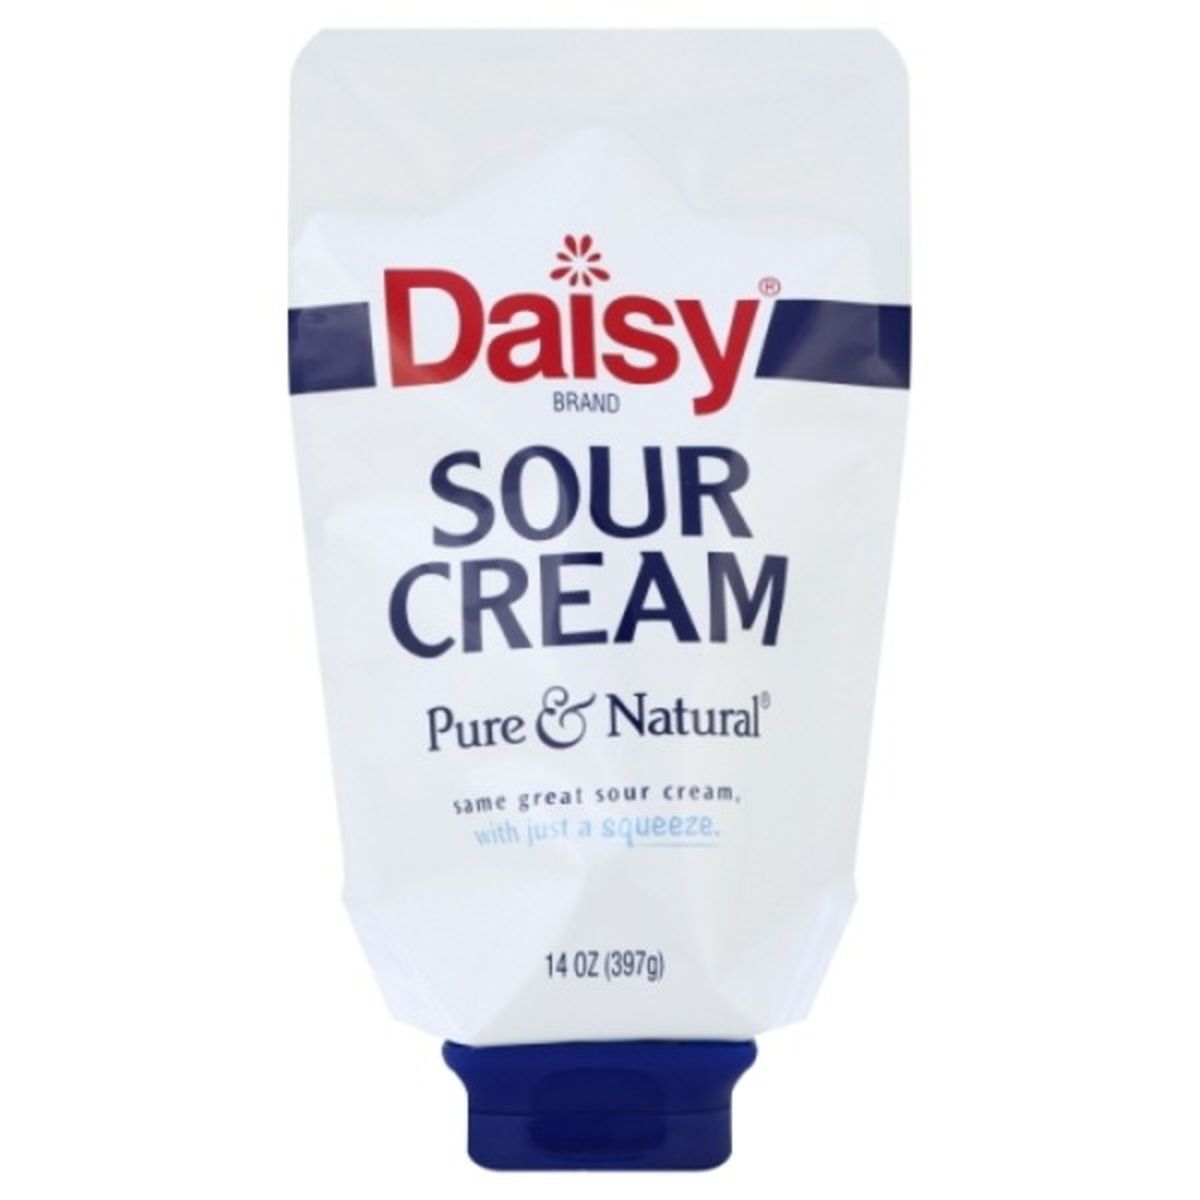 Calories in Daisy Sour Cream